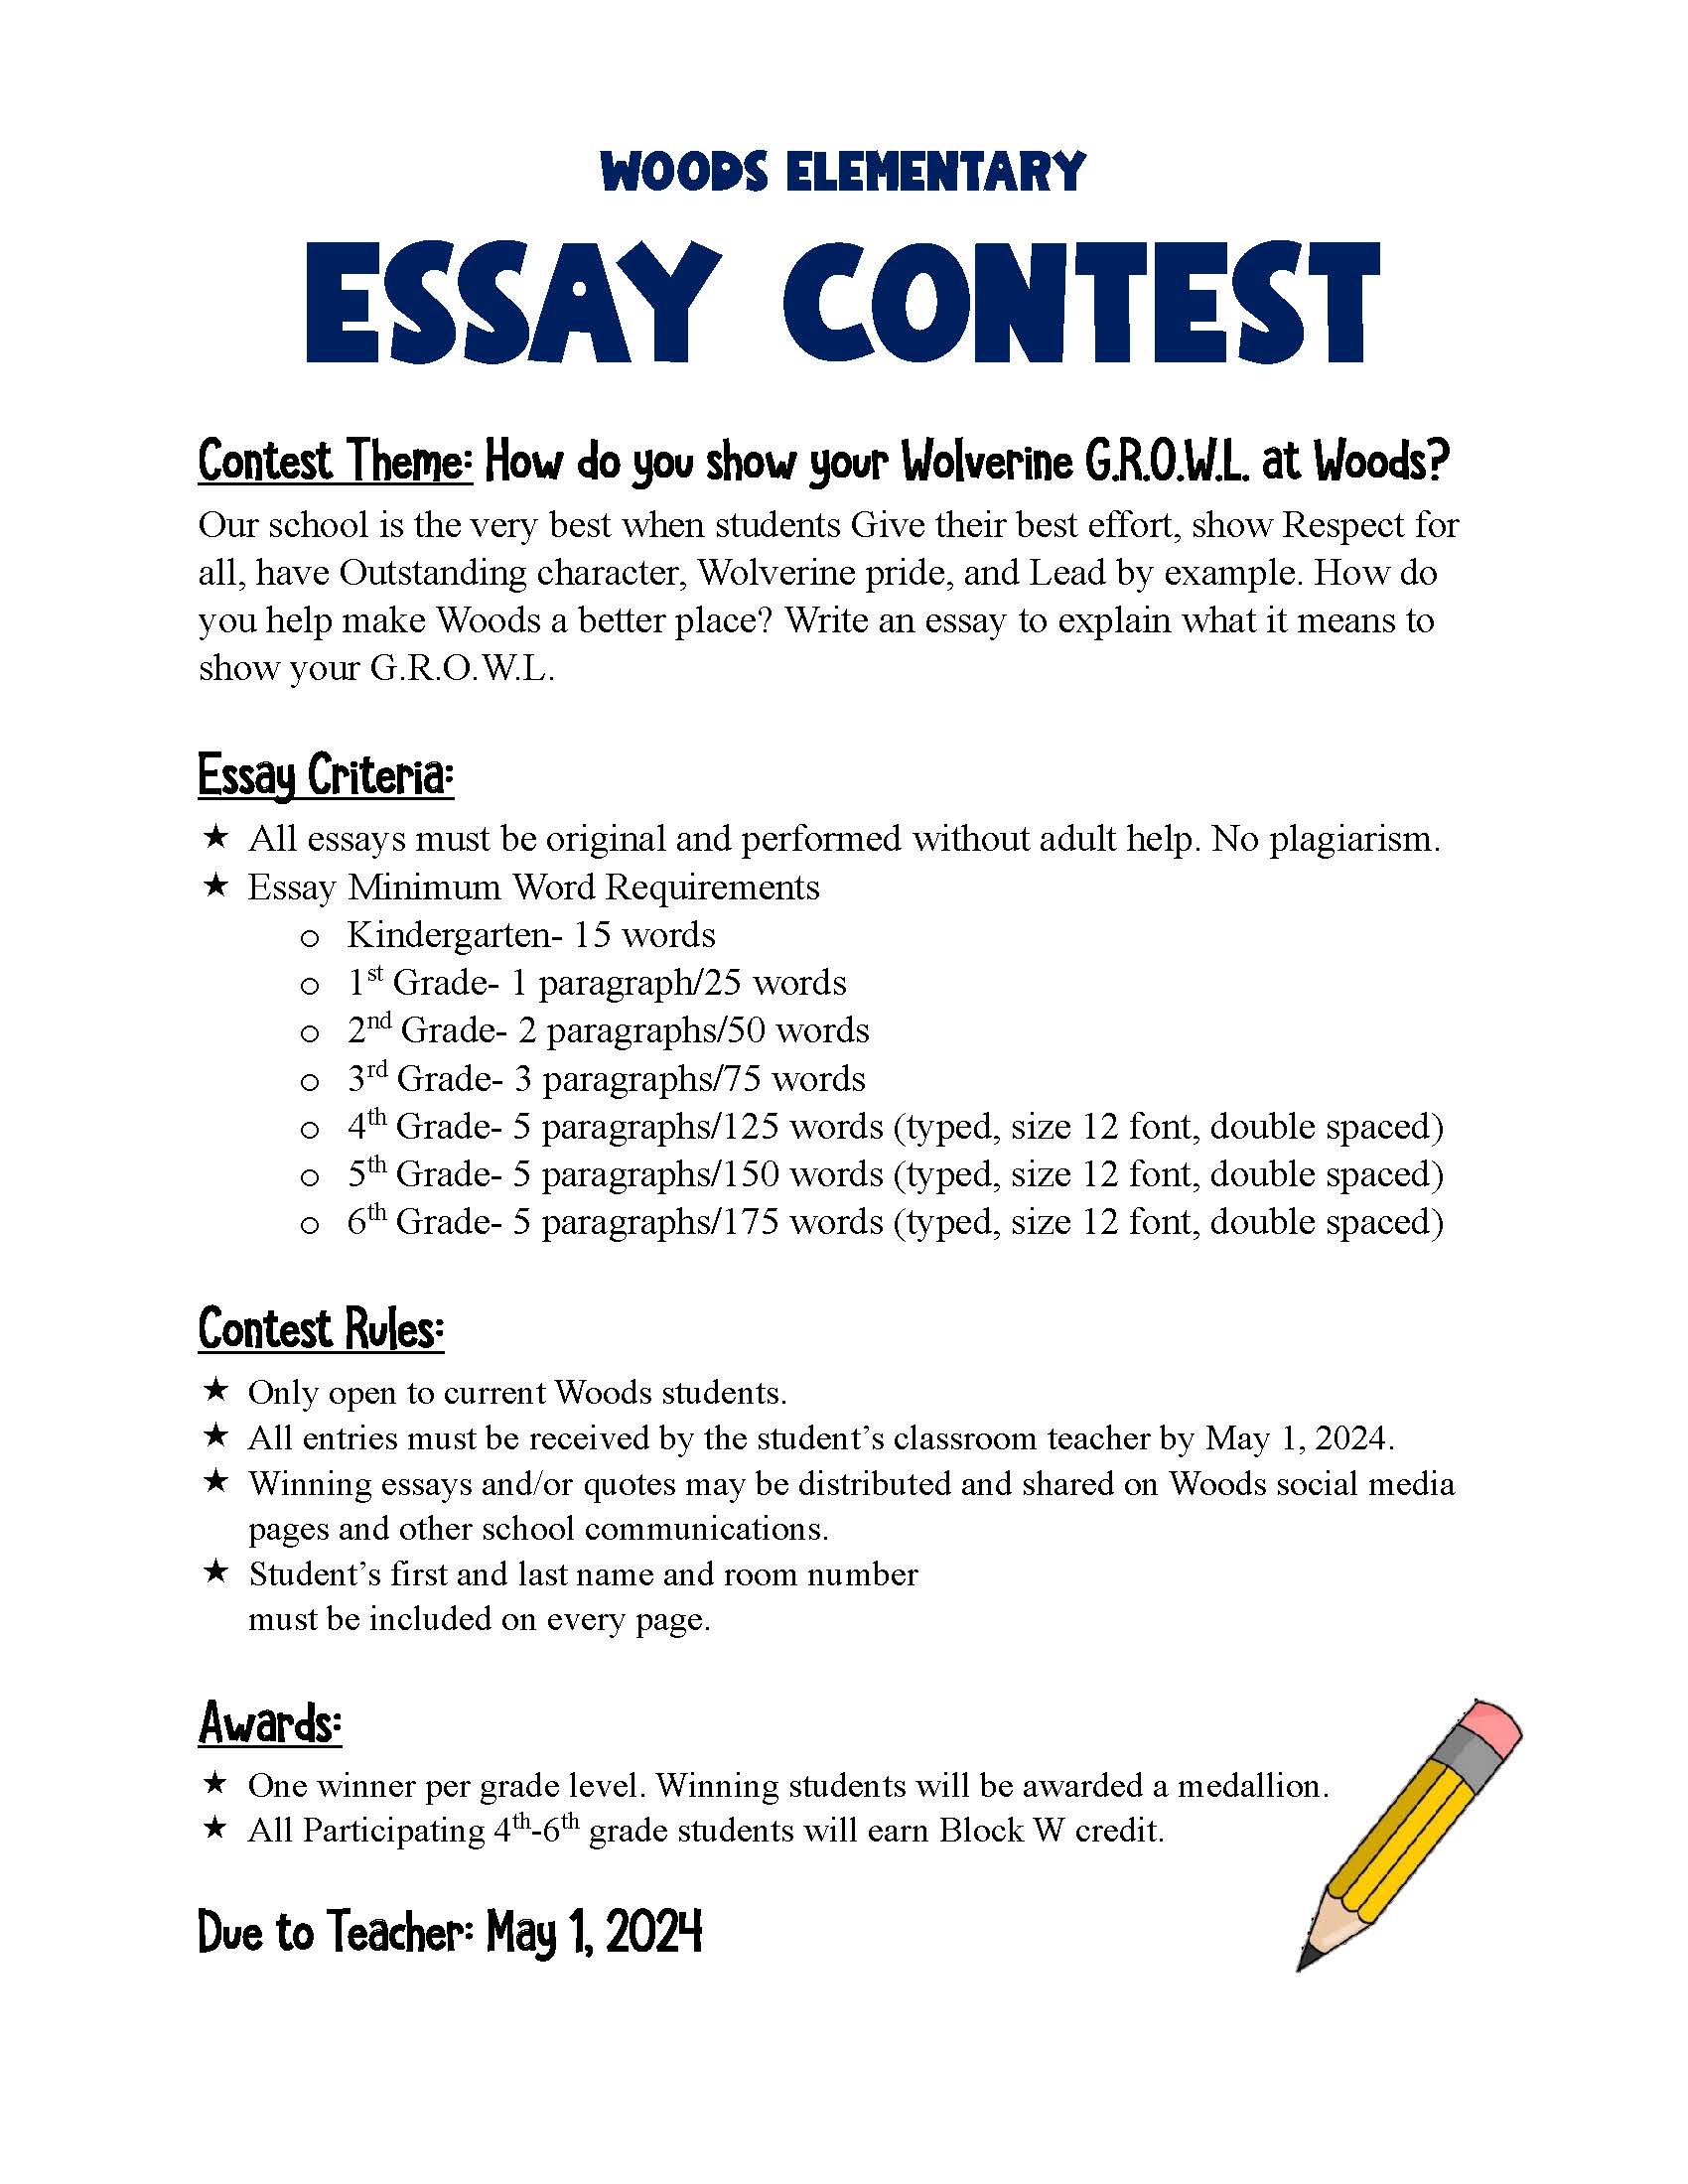 Essay contest Flier